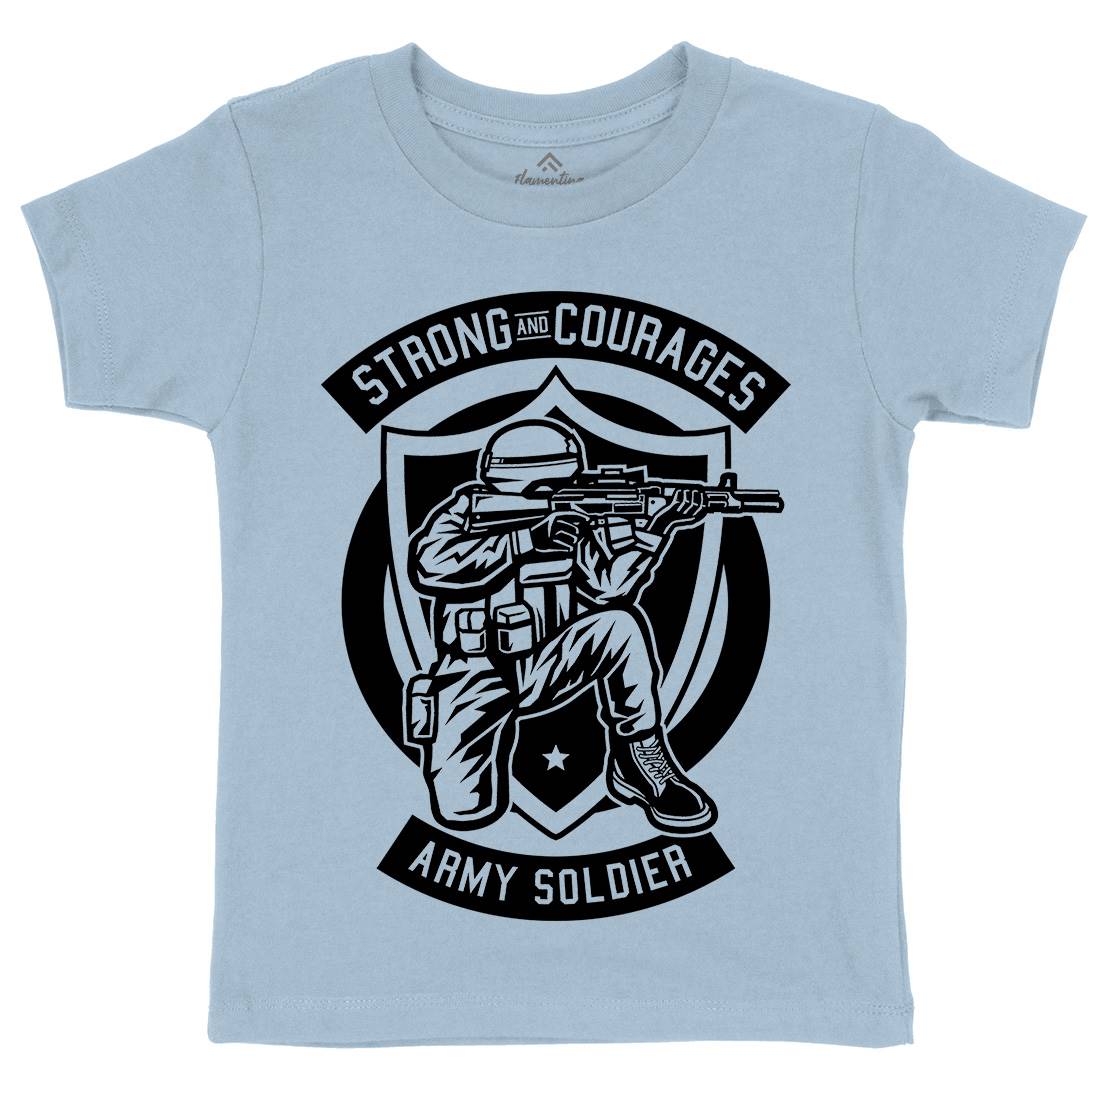 Army Soldier Kids Organic Crew Neck T-Shirt Army B483